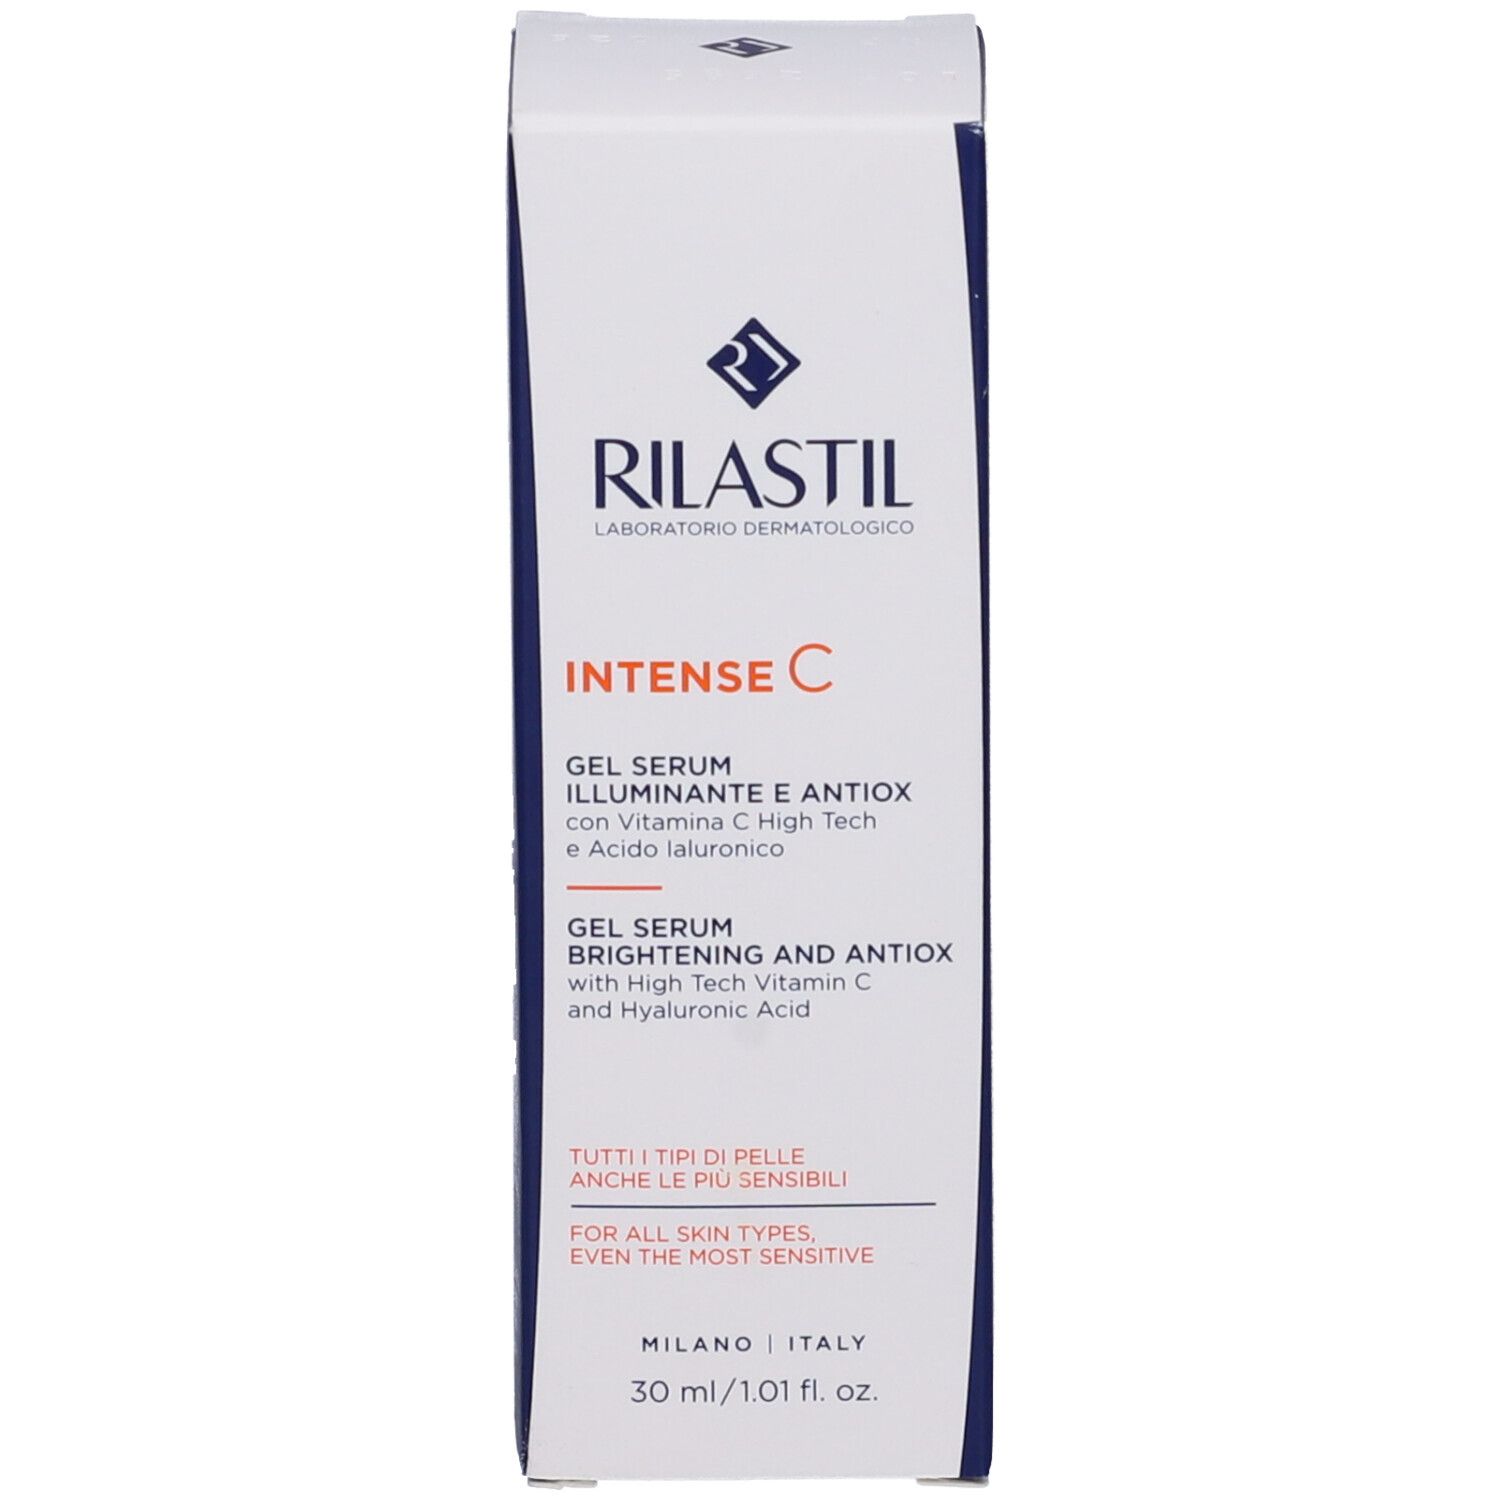 RILASTIL® Intense C Gel Serum